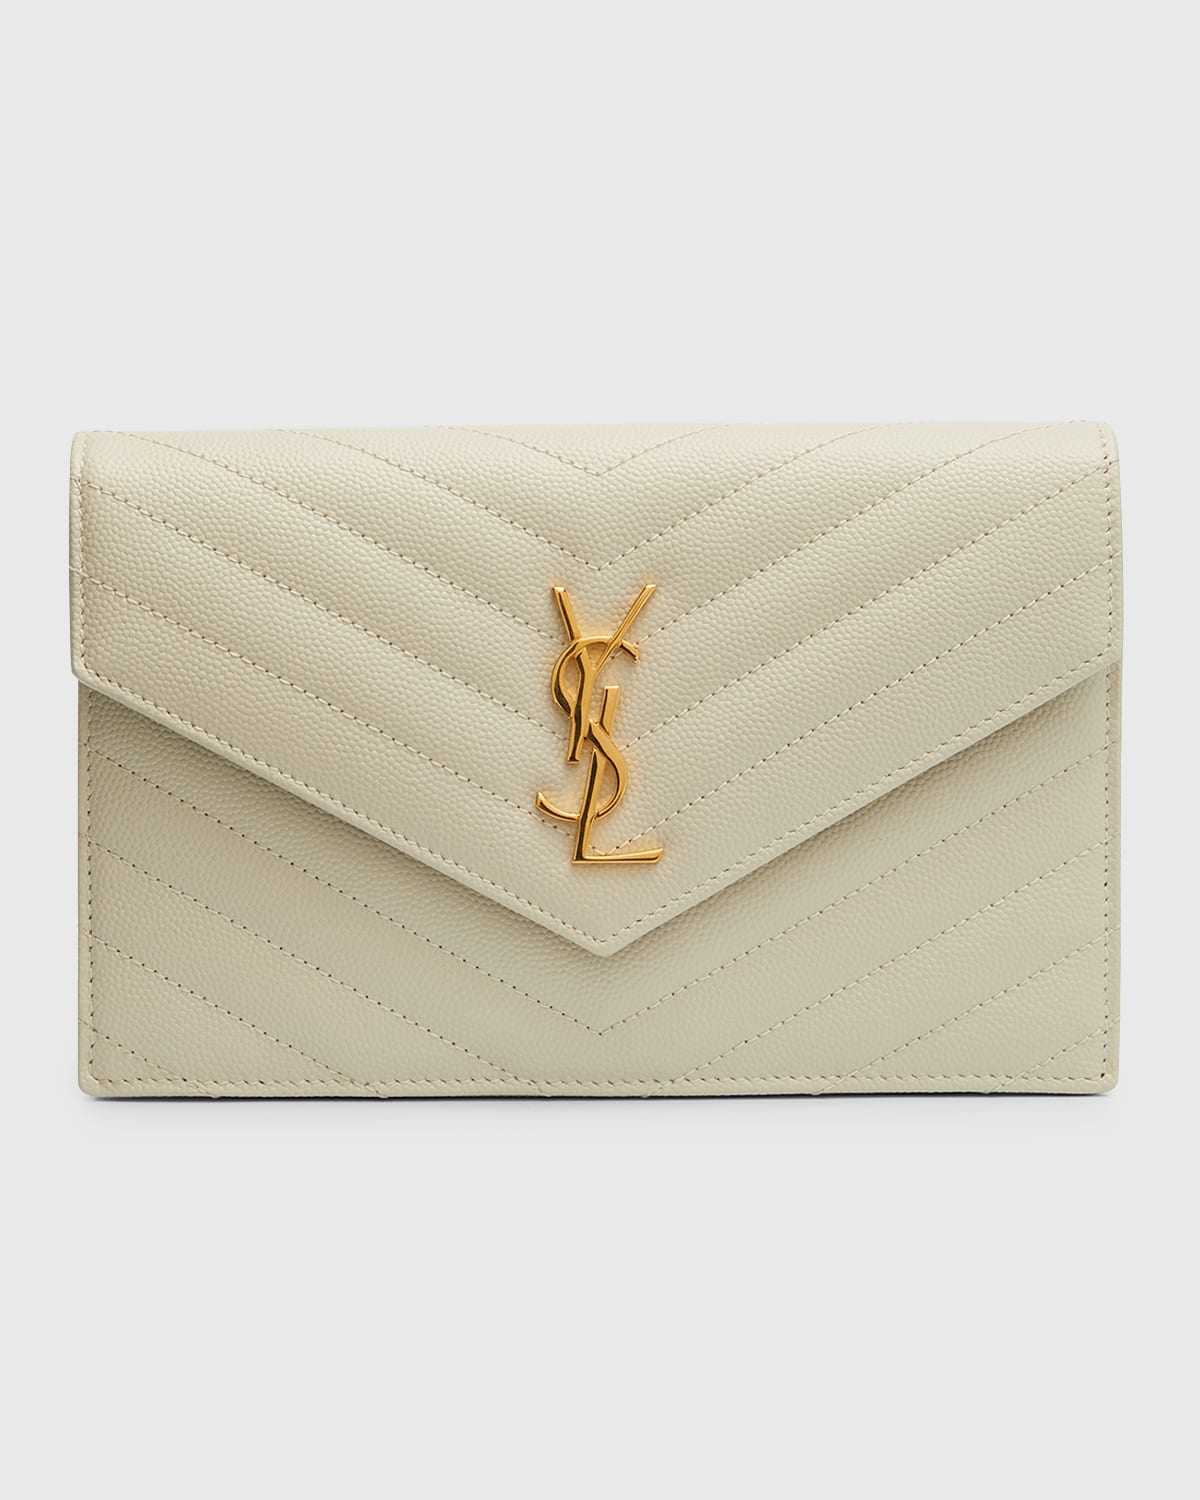 Ysl Envelope Chain Wallet Crema Soft